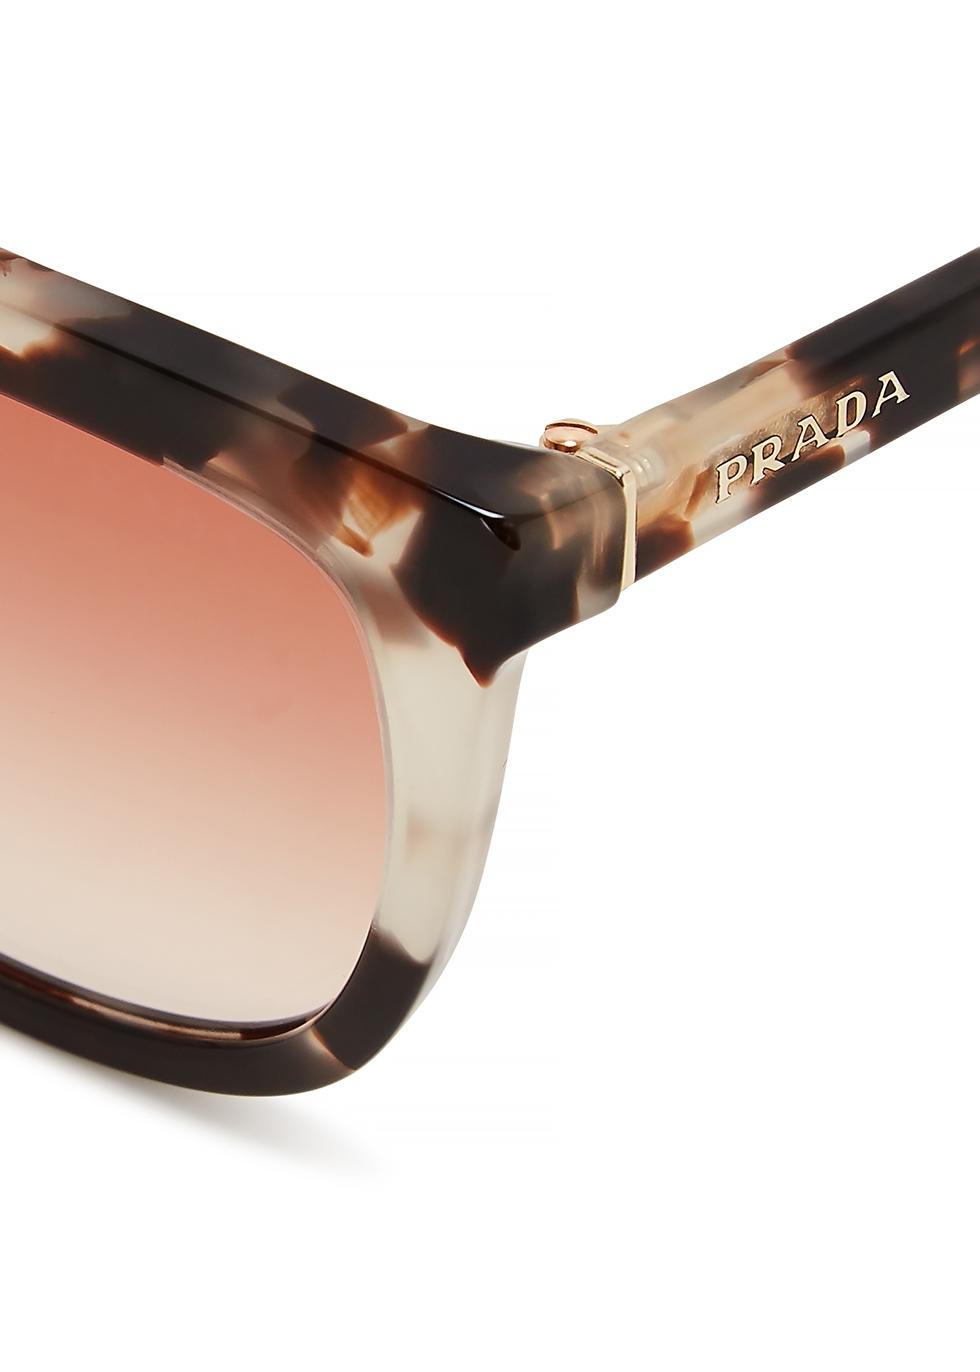 prada ray ban style sunglasses